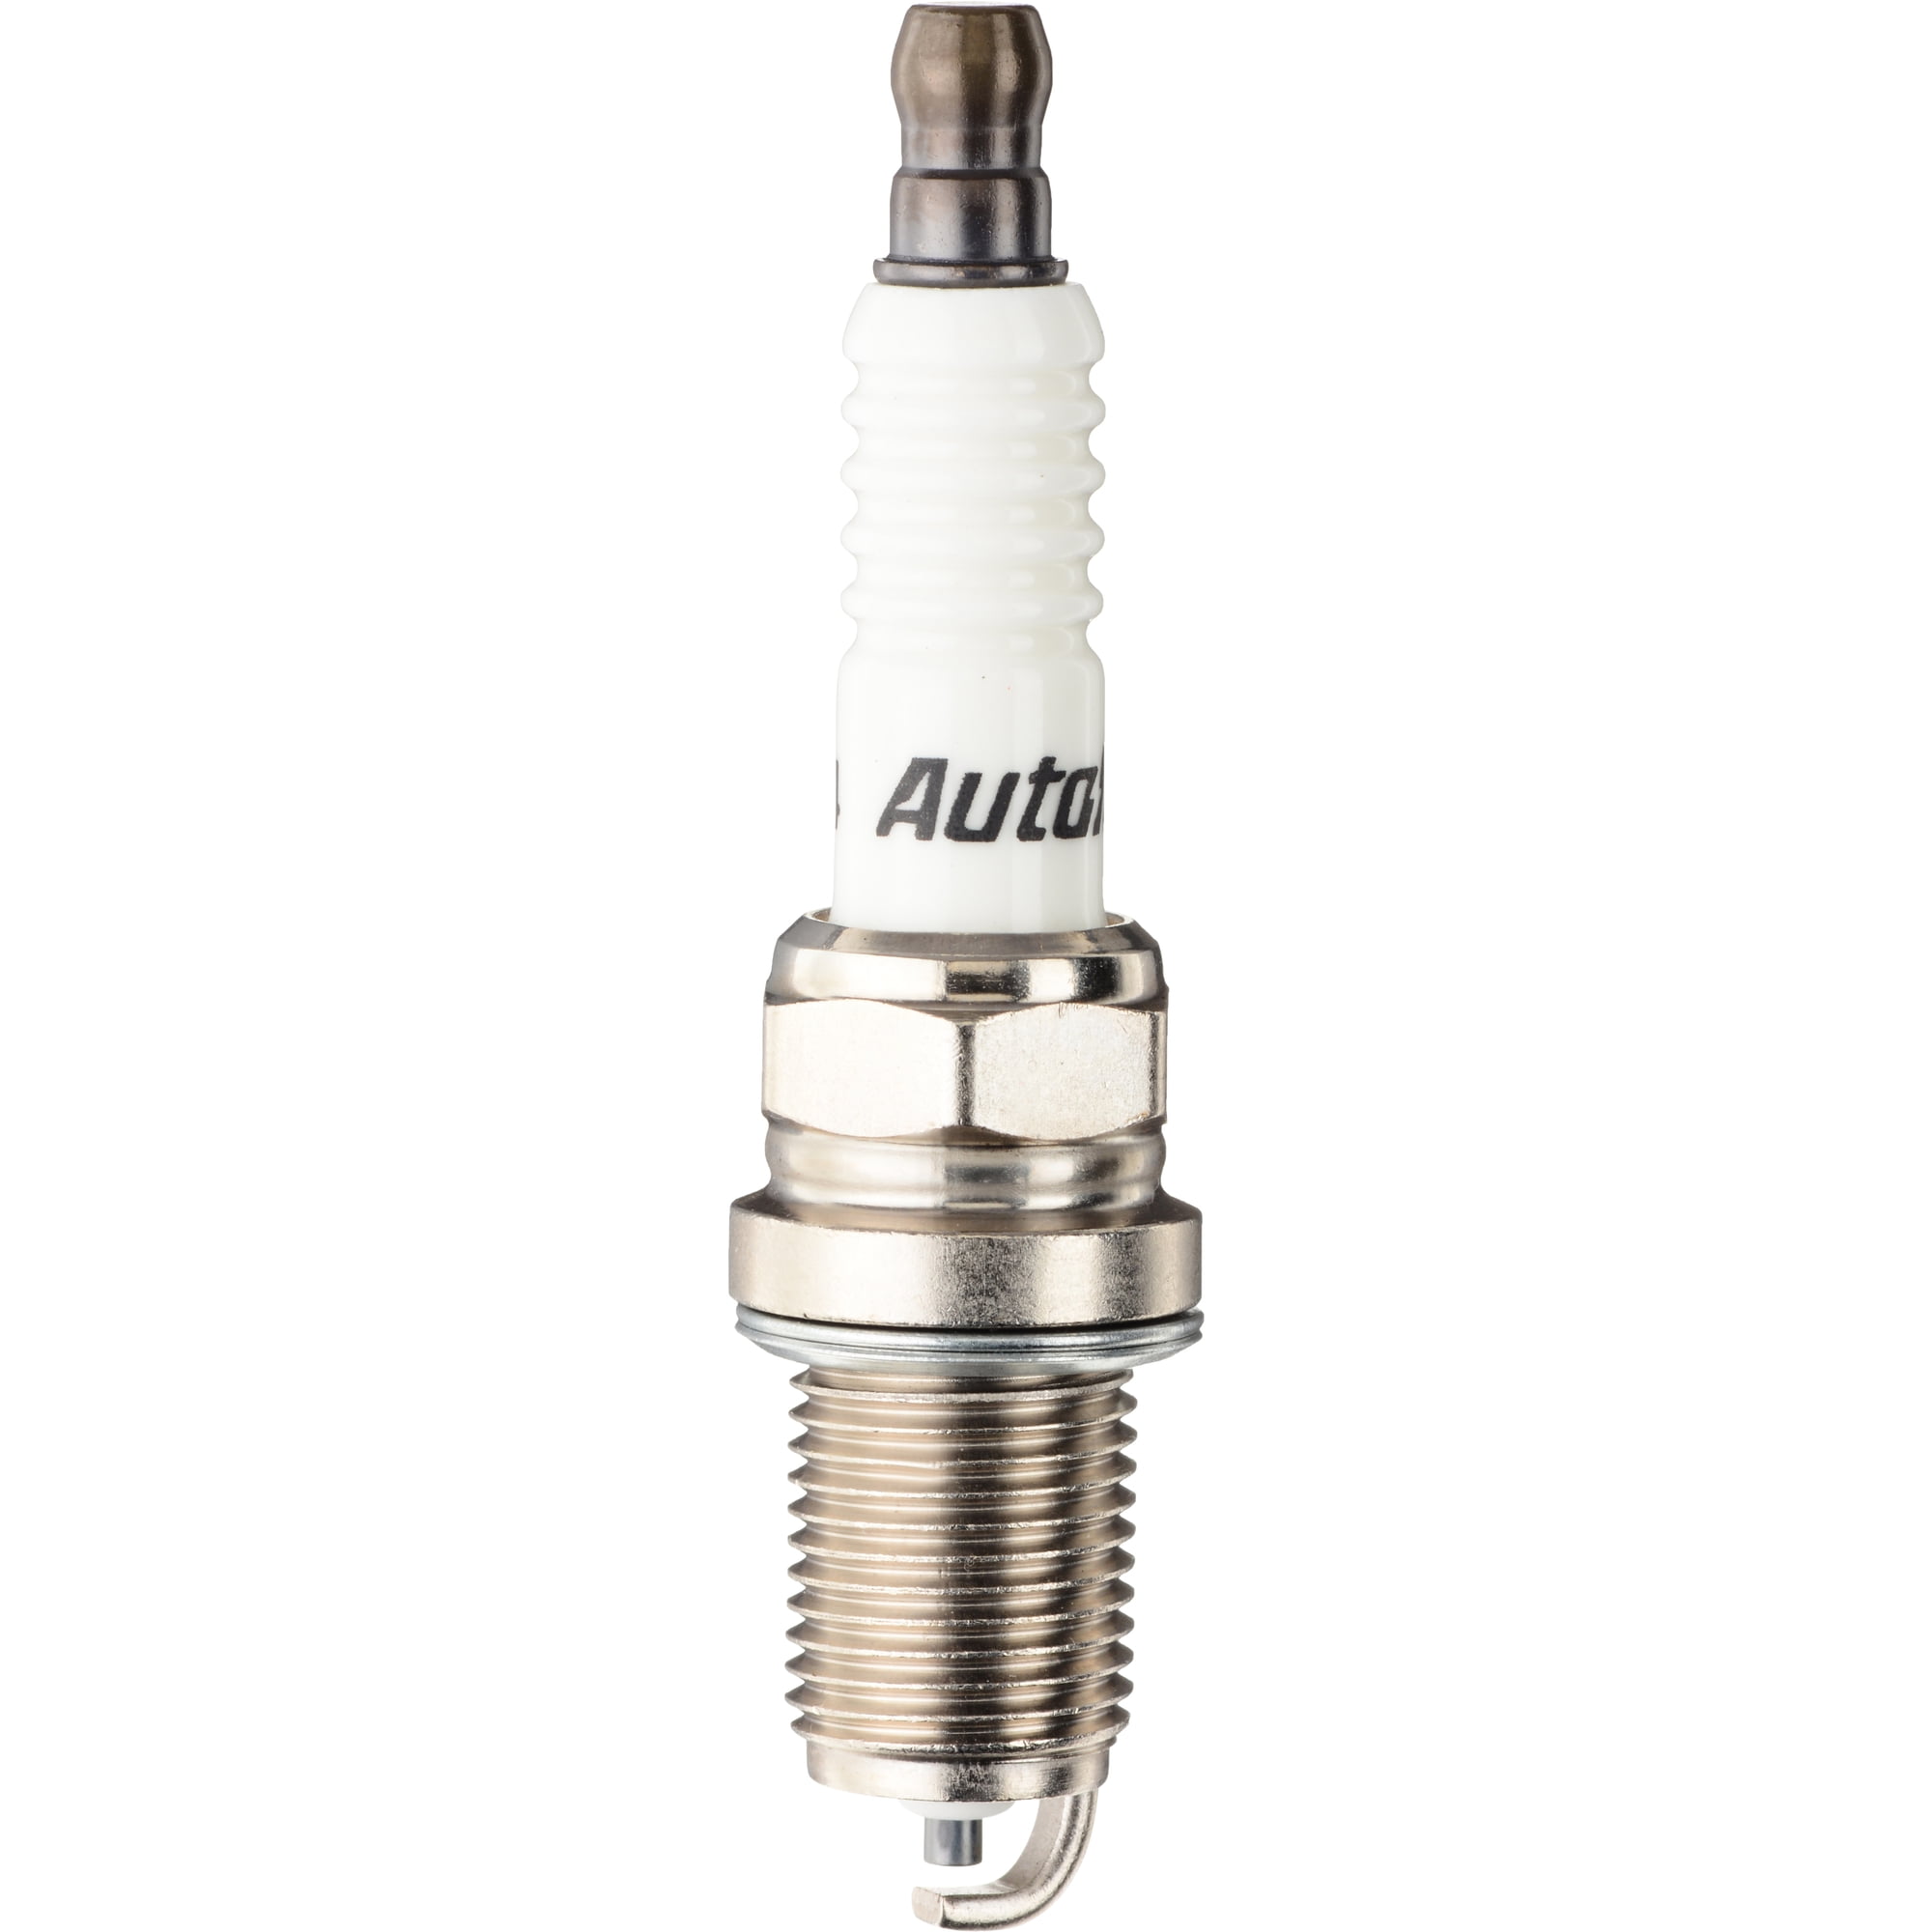 Autolite Small Engine Spark Plug, 3924 for Select Briggs, Stratton